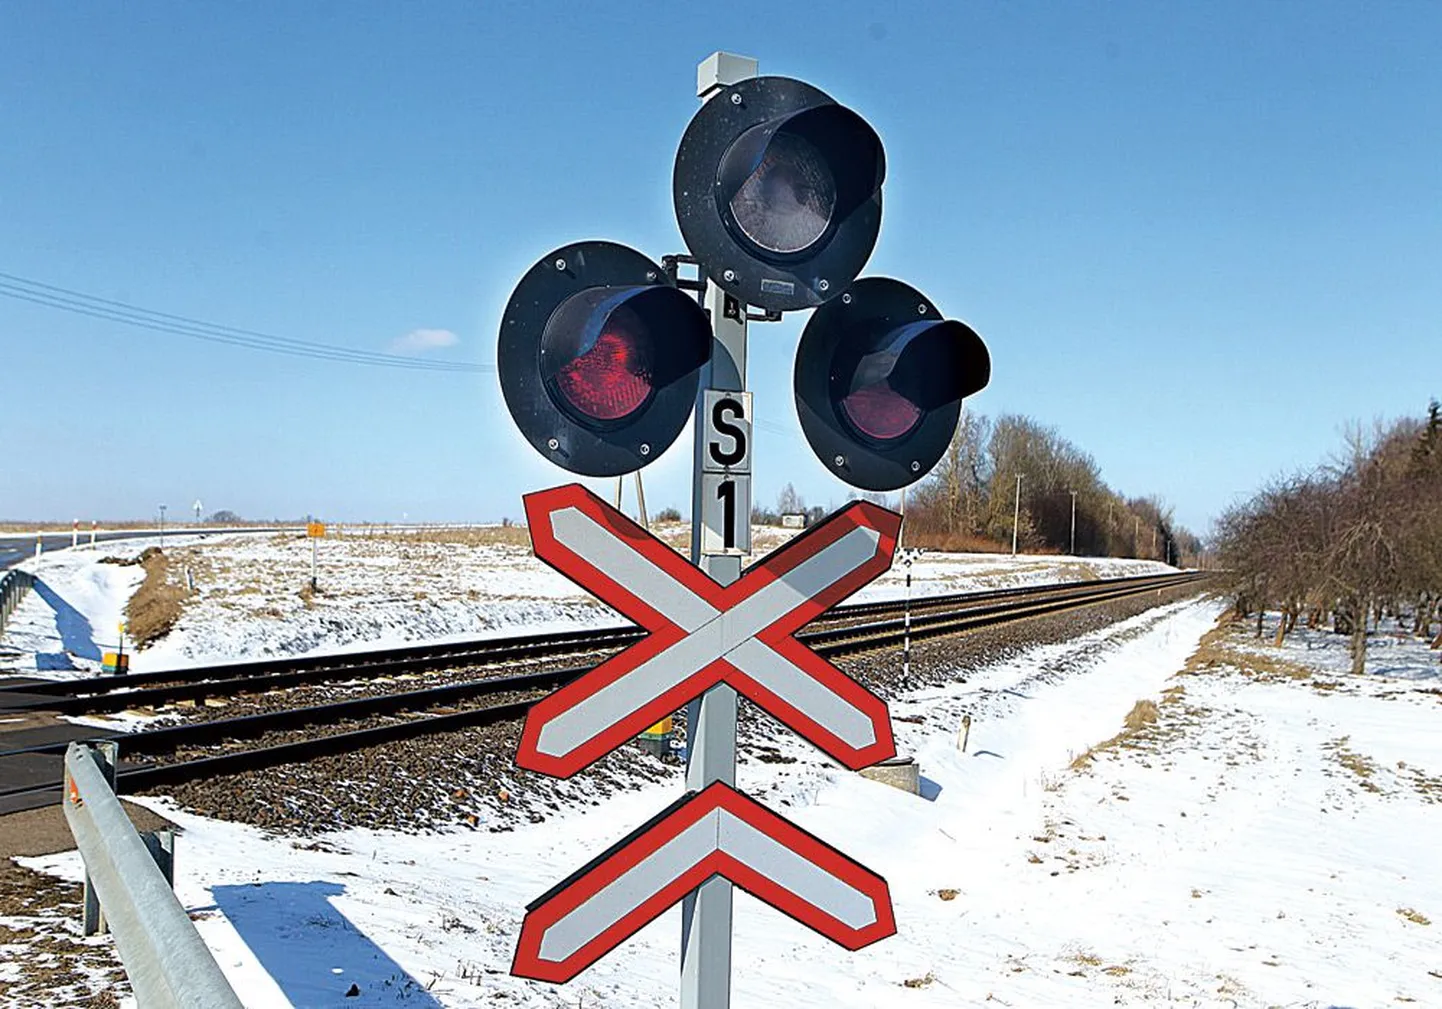 Rail Balticu projekt kipub toppama jääma.